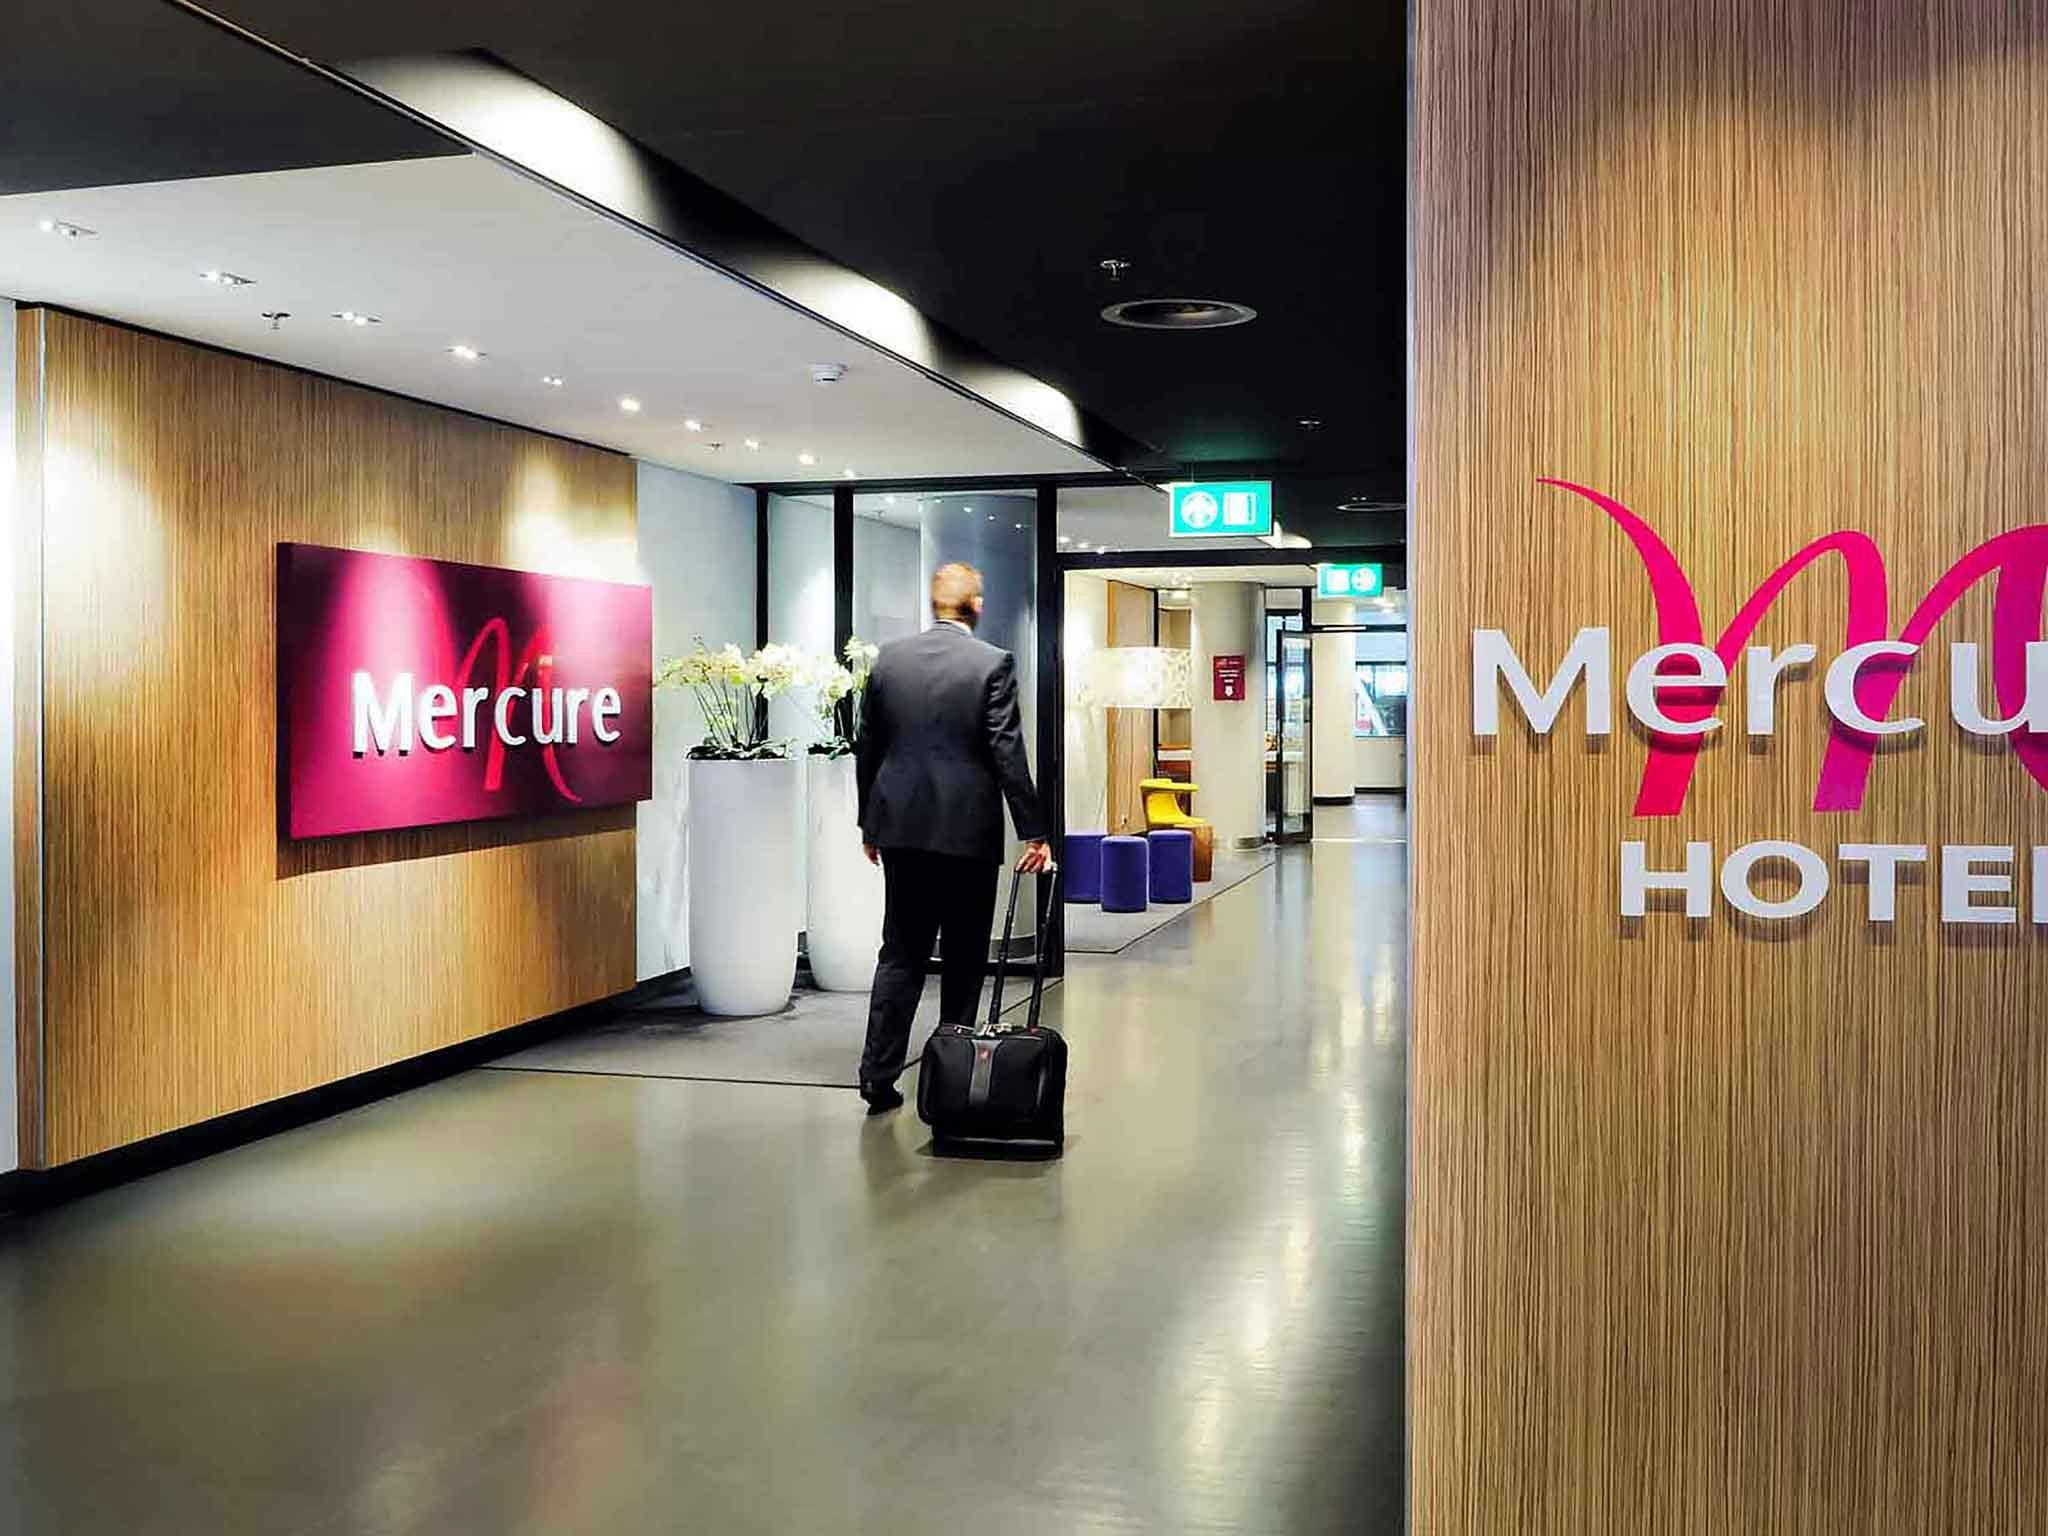 Mercure Hotel (Douane Schiphol)